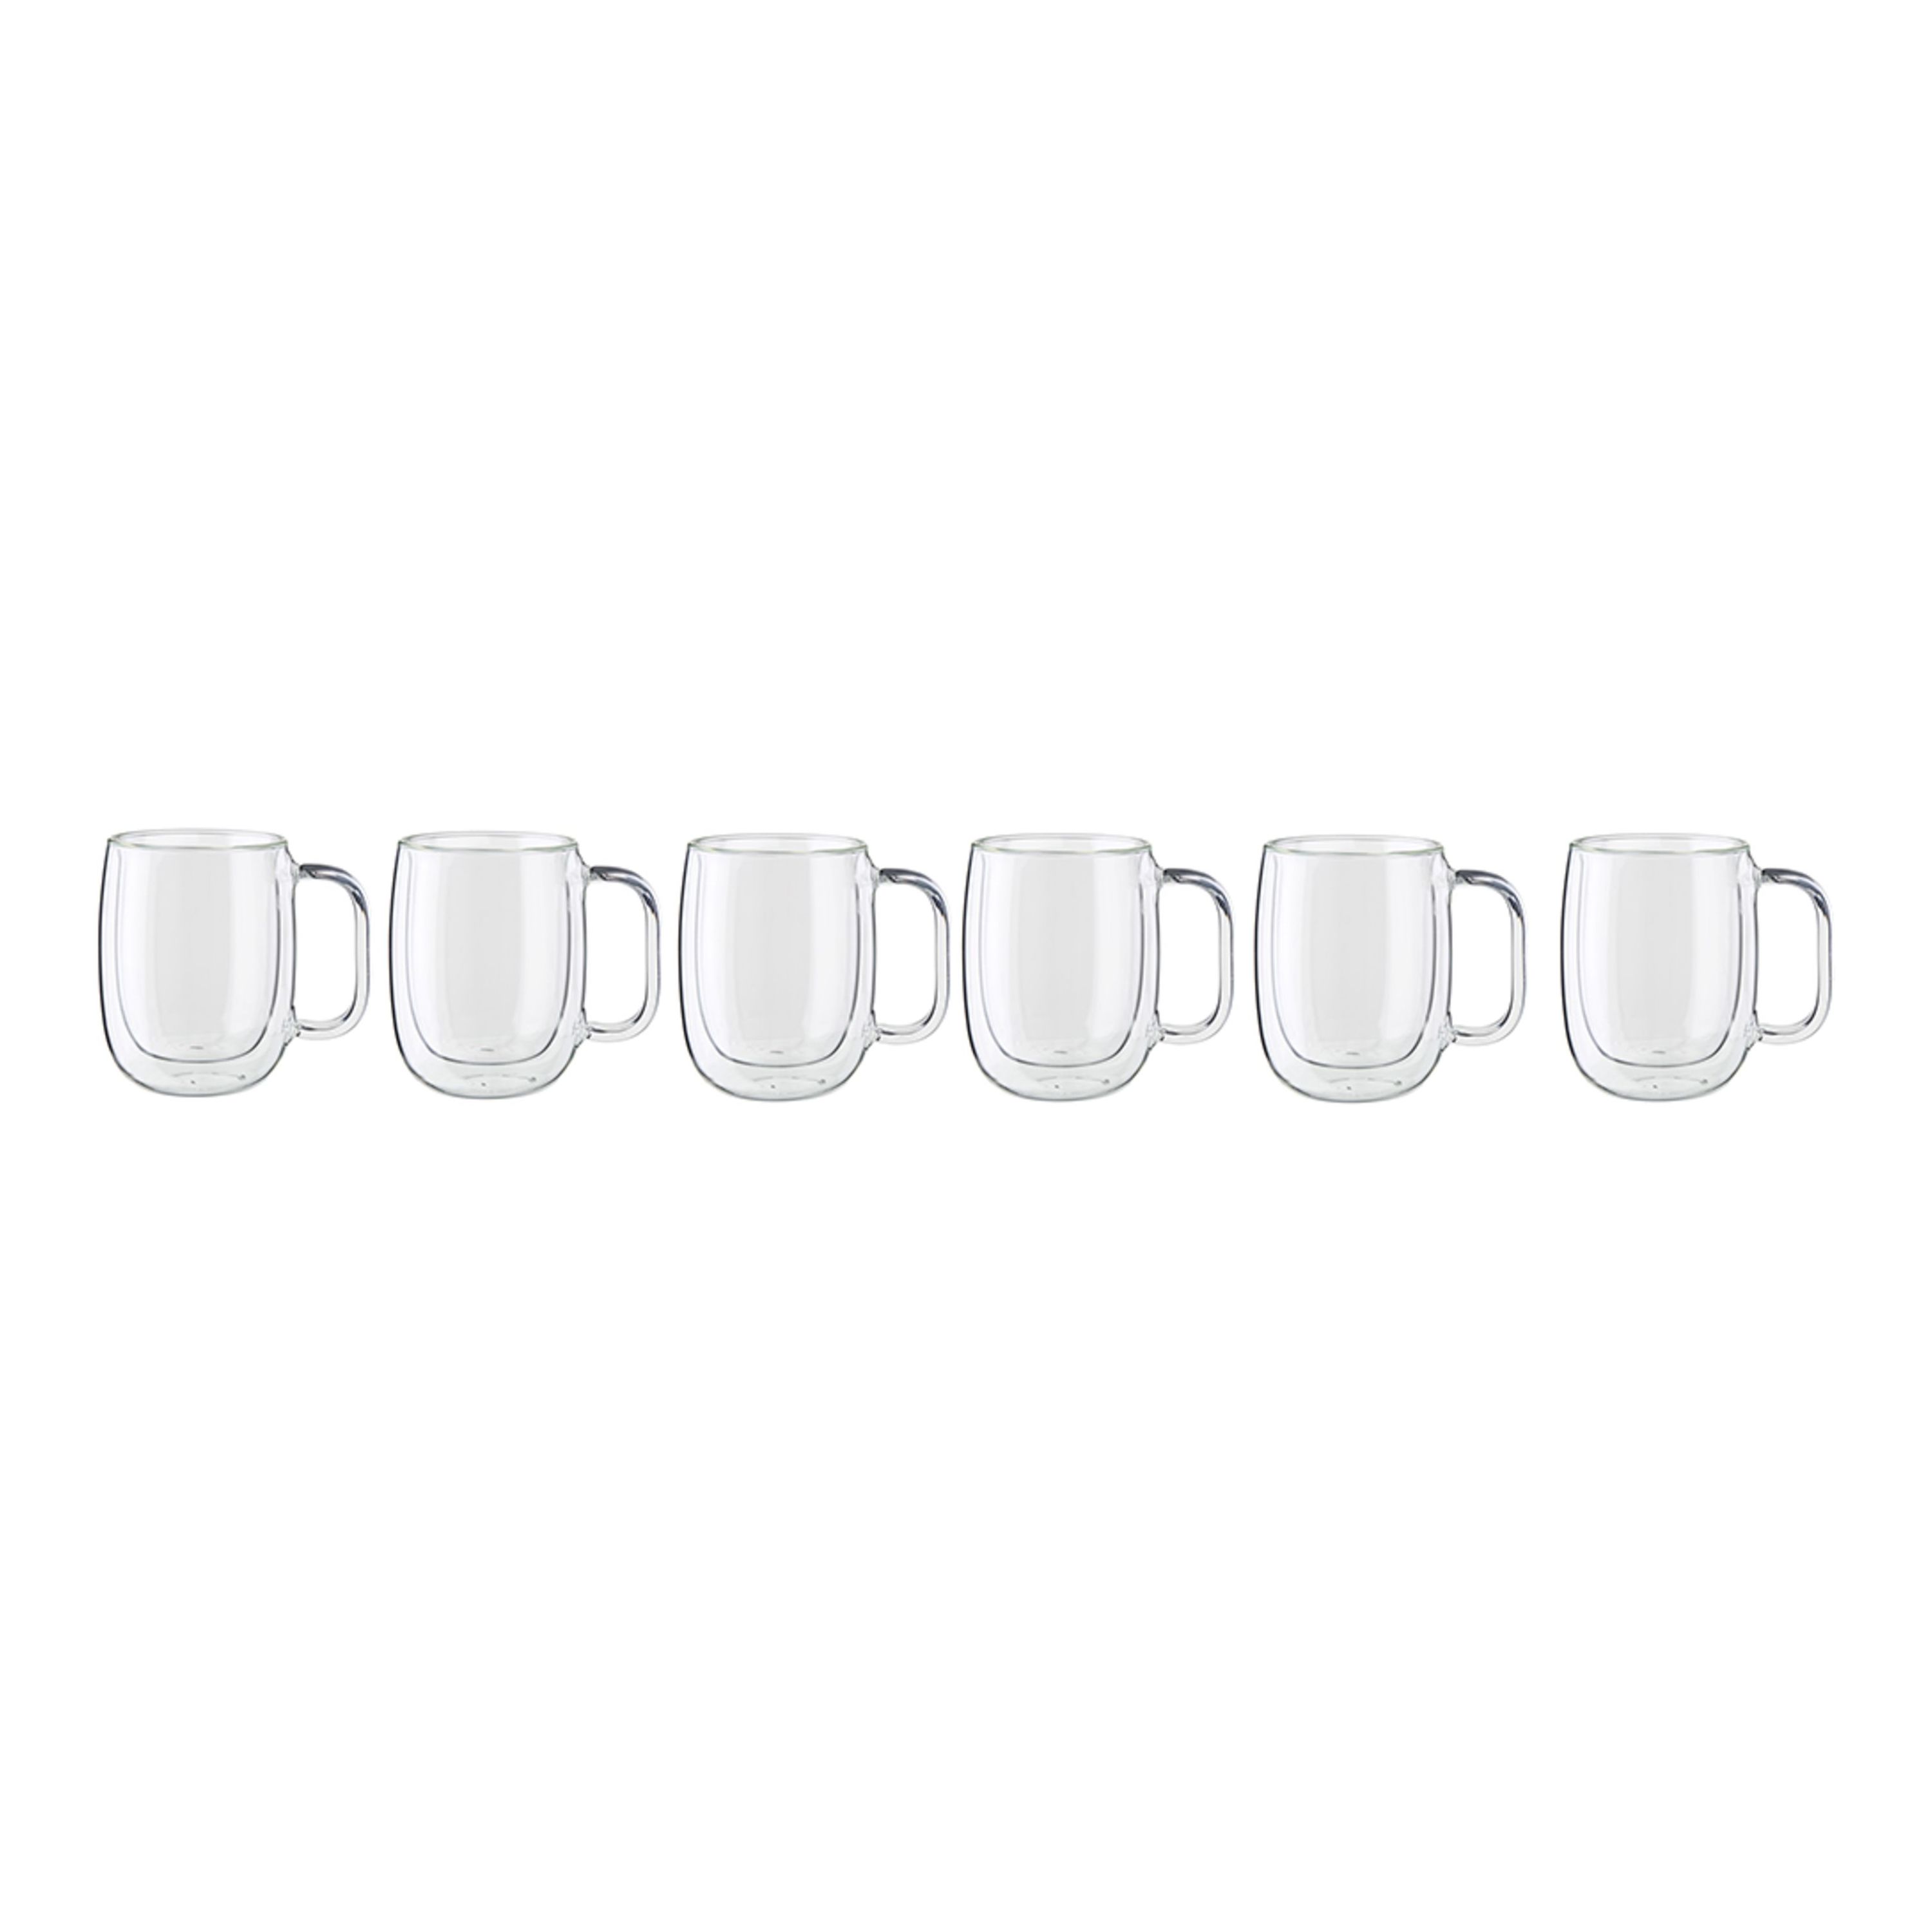 "SORRENTO" HIGHBALL GLASSES SET OF SIX HAND PAINTED VENETIAN GLASSWARE 